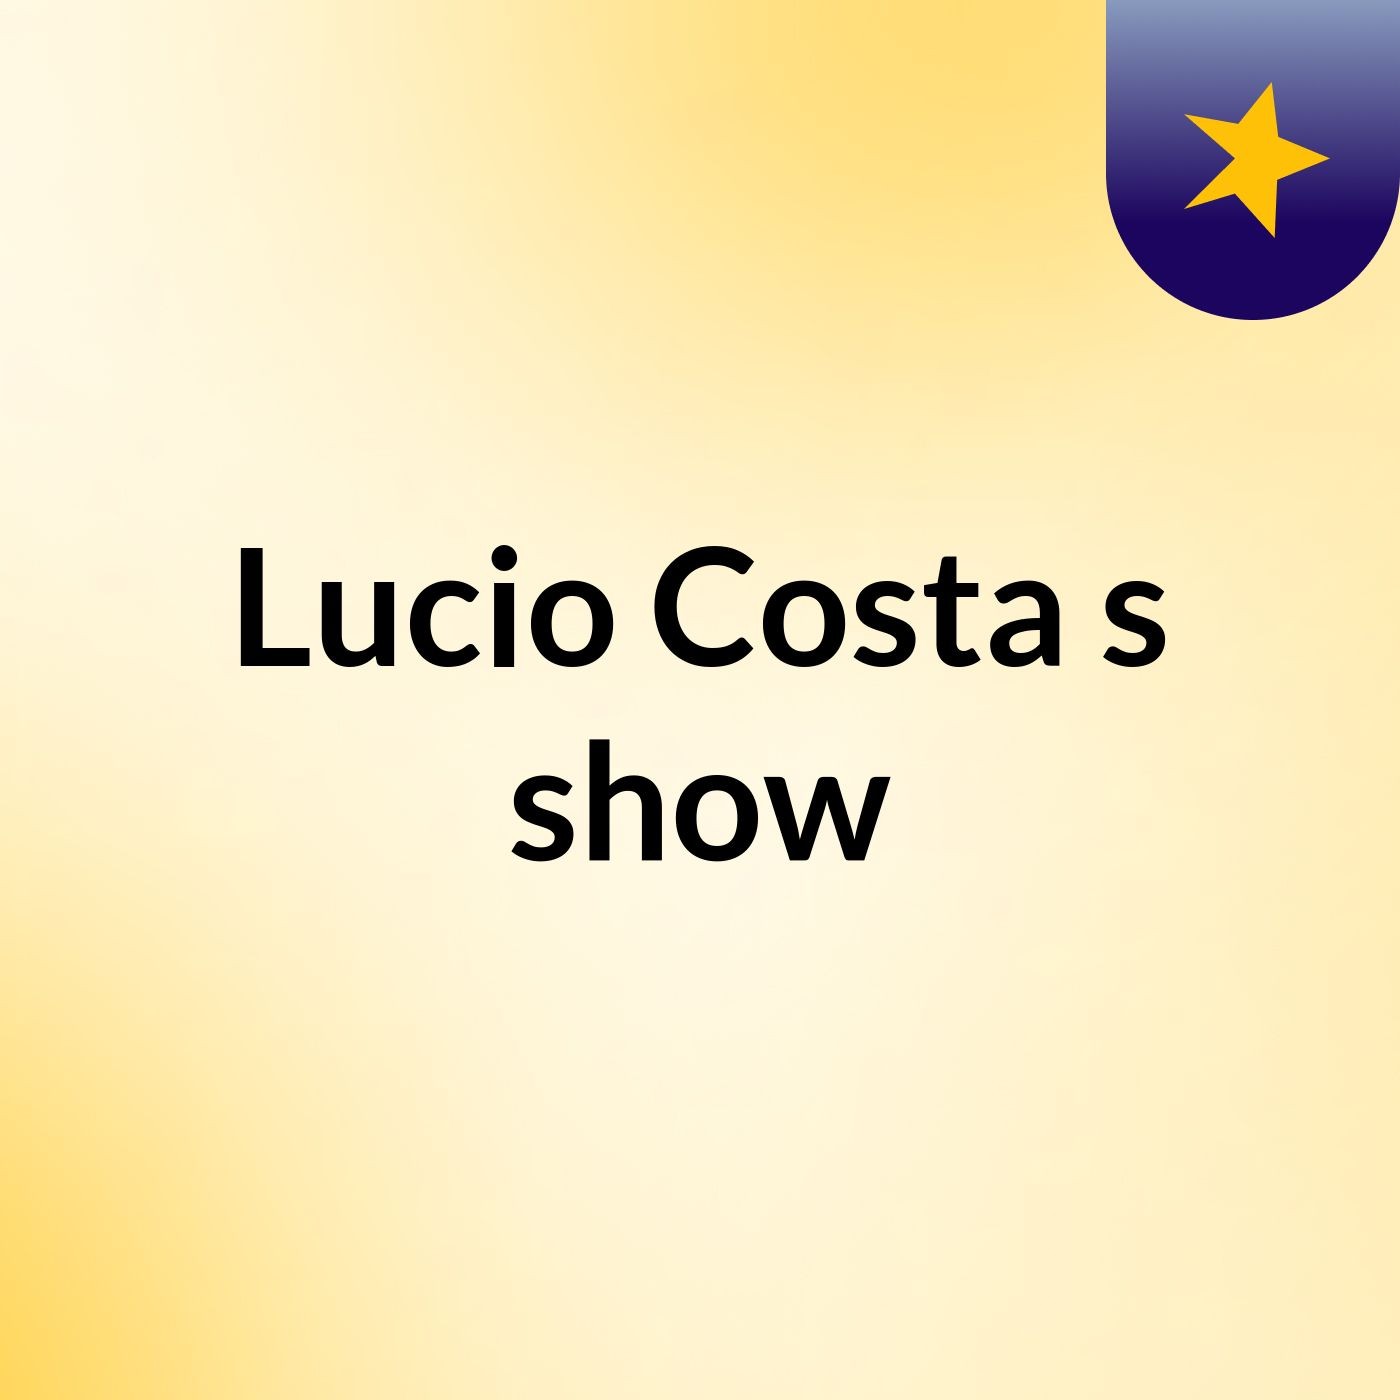 Lucio Costa's show